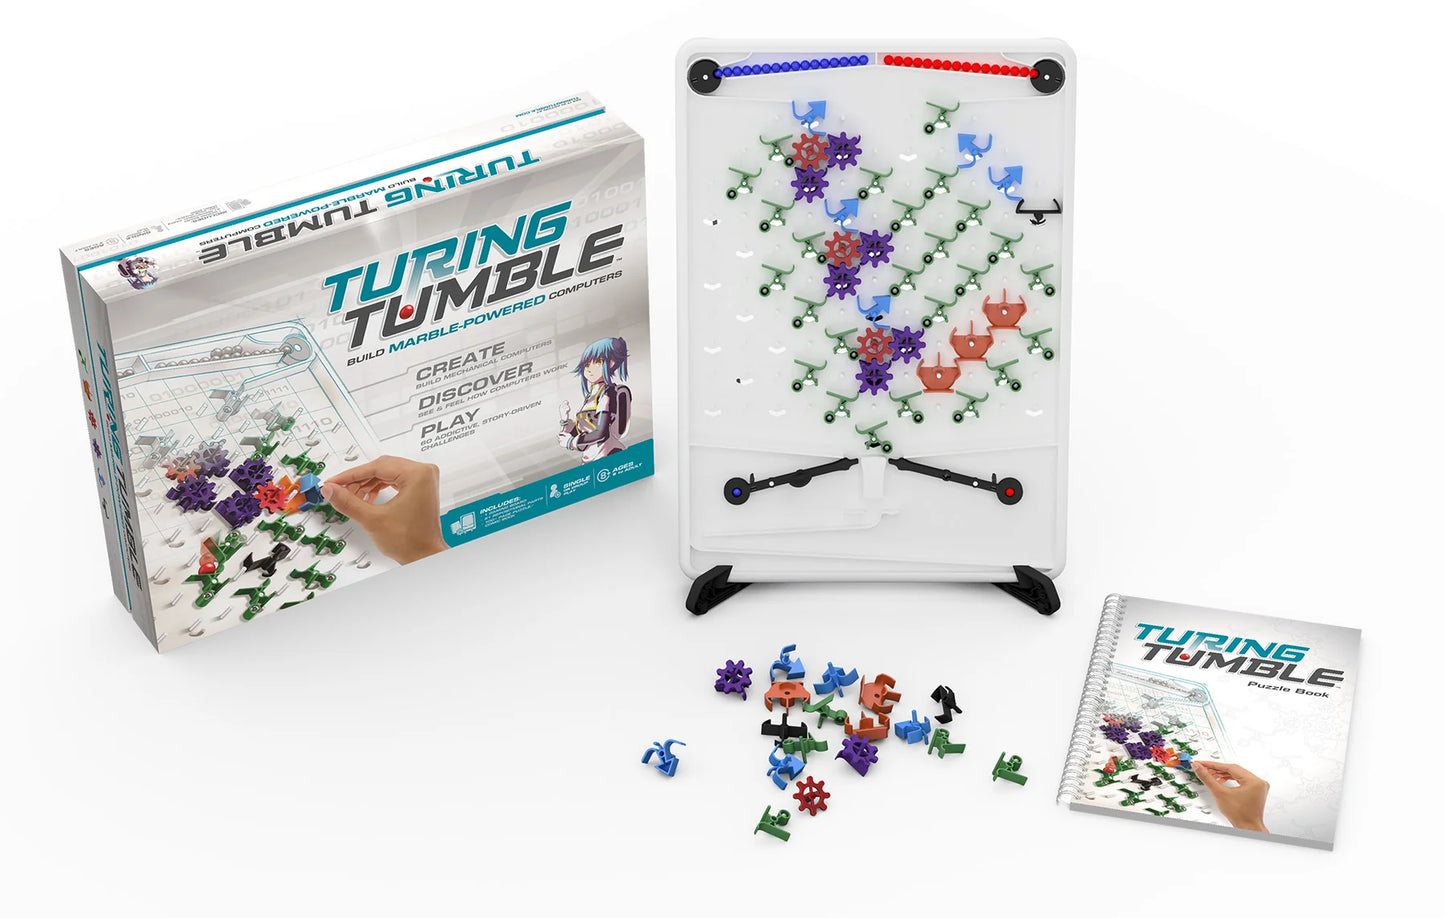 Turing Tumble Kickstarter/圖靈翻滾 Kickstarter版